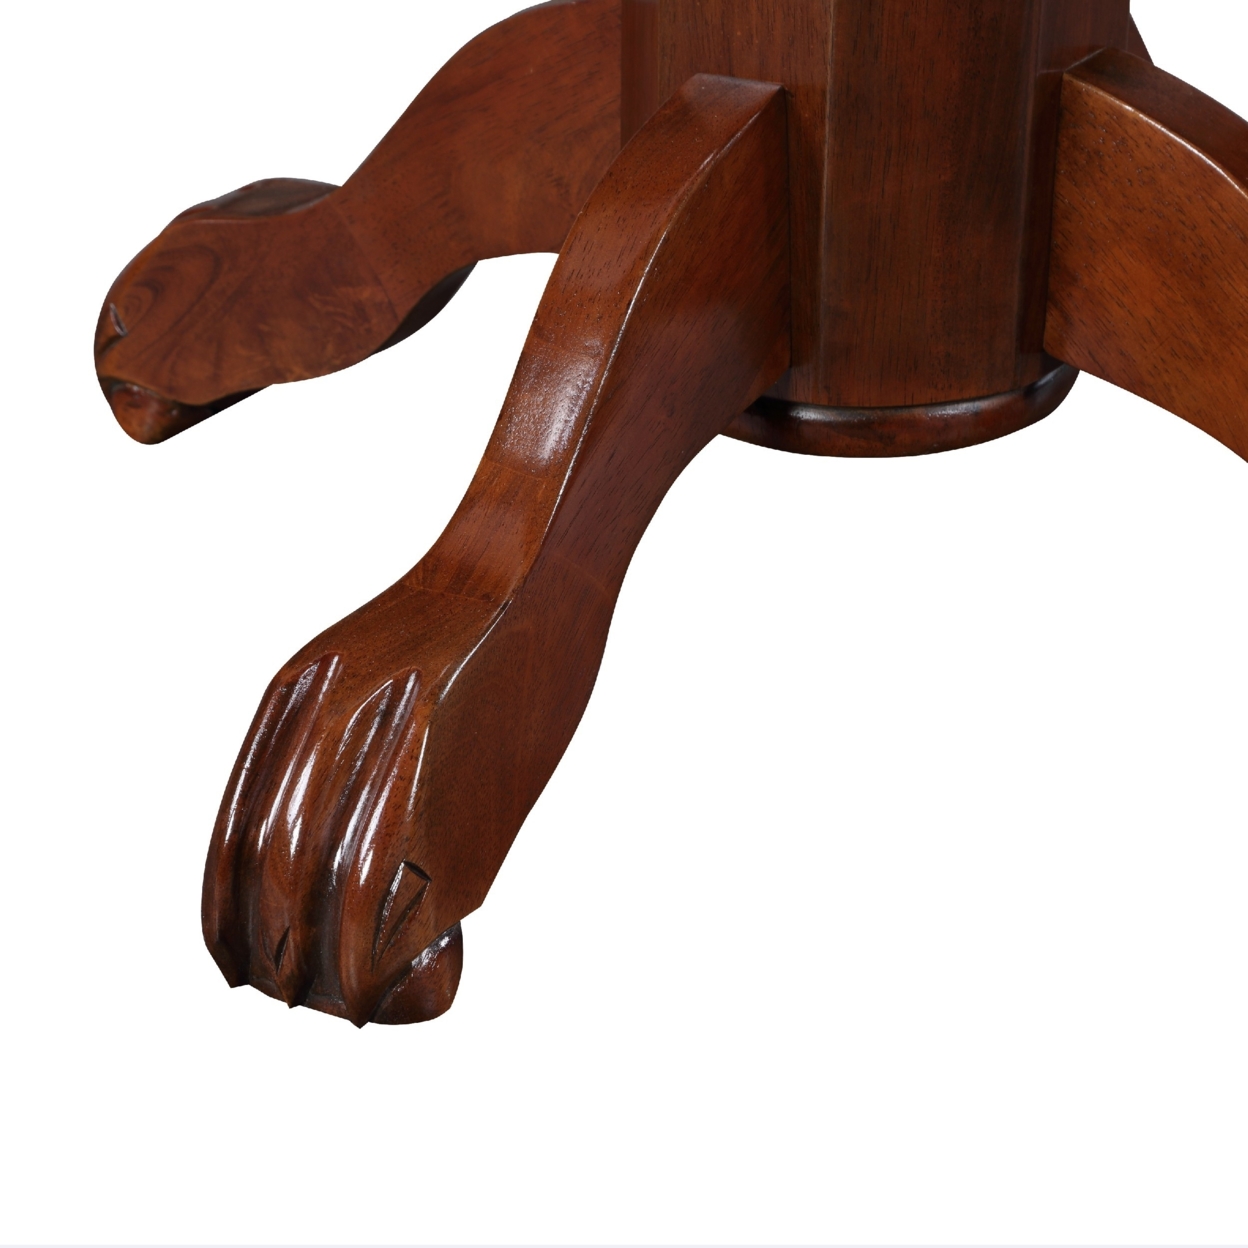 Ava 42 Inch Pub Bar Table, Wood, Round Sunburst Design, Carved Pedestal, Espresso Brown